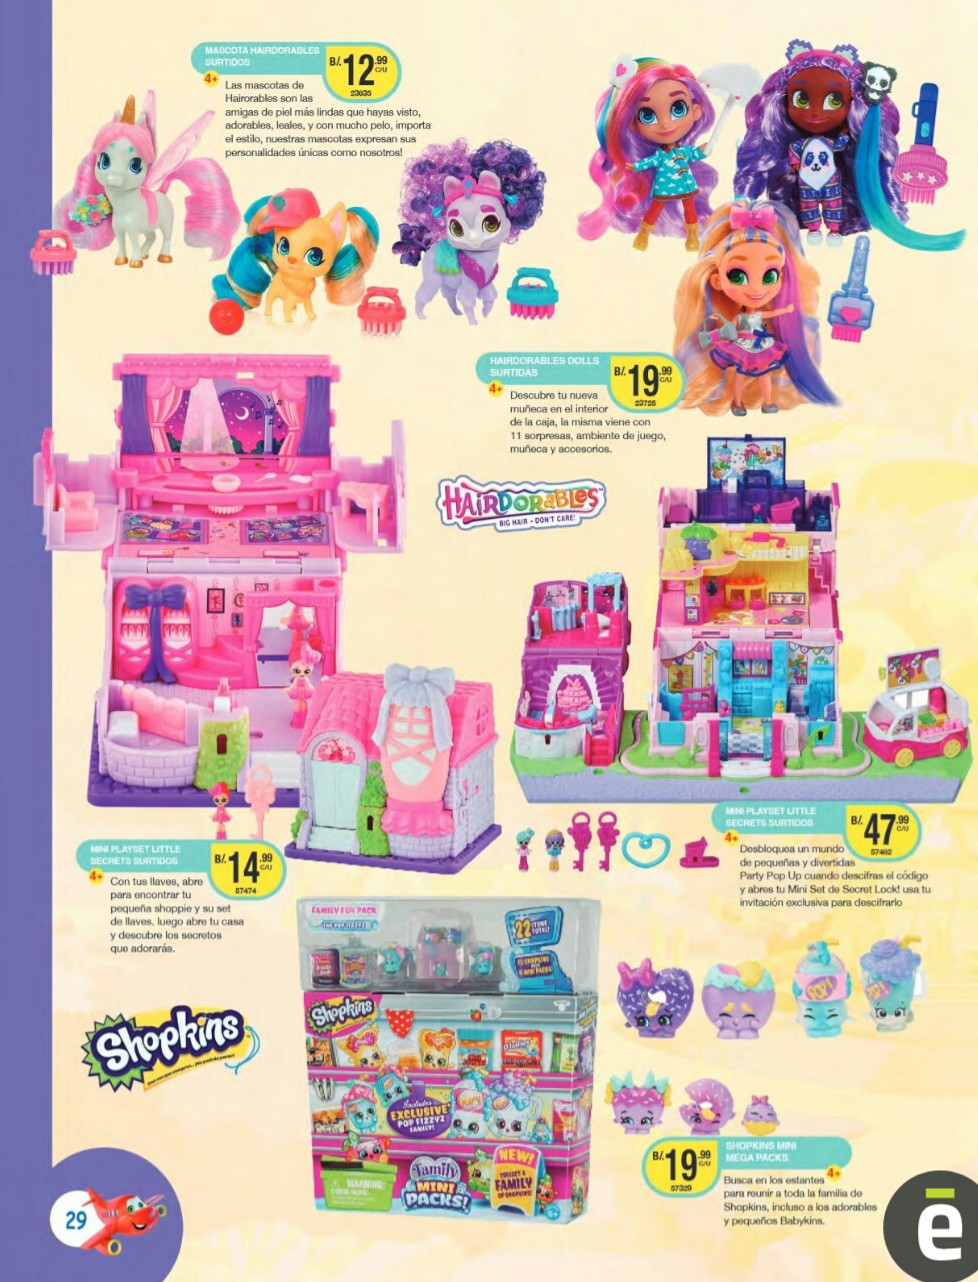 Catalogo juguetes Titan Toys 2019 p29